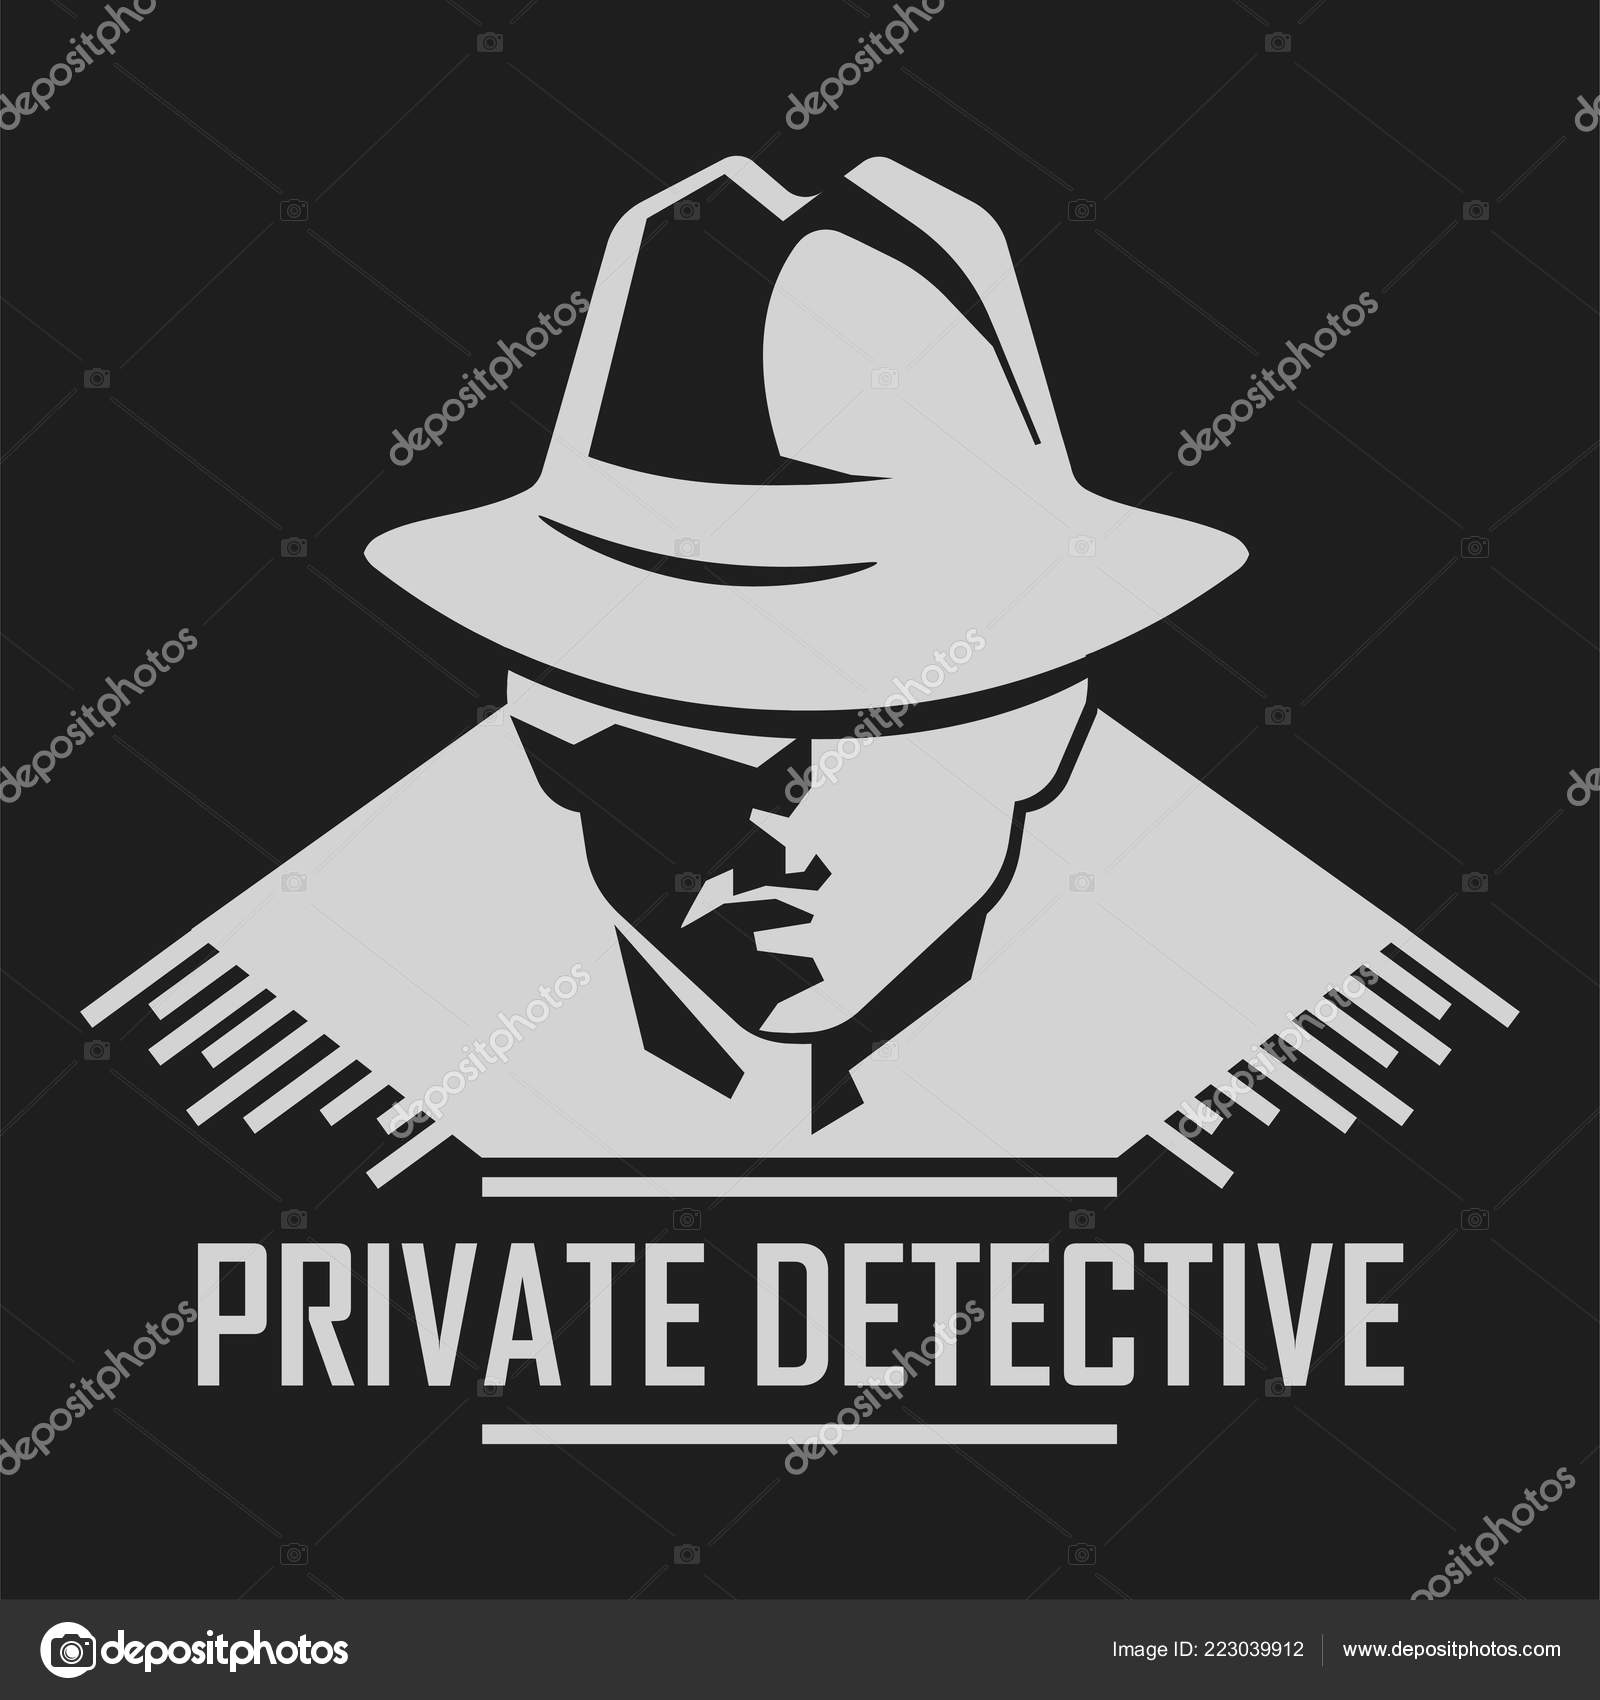 Private detective logo of vector man in hat for investigation service agencyDAJCV